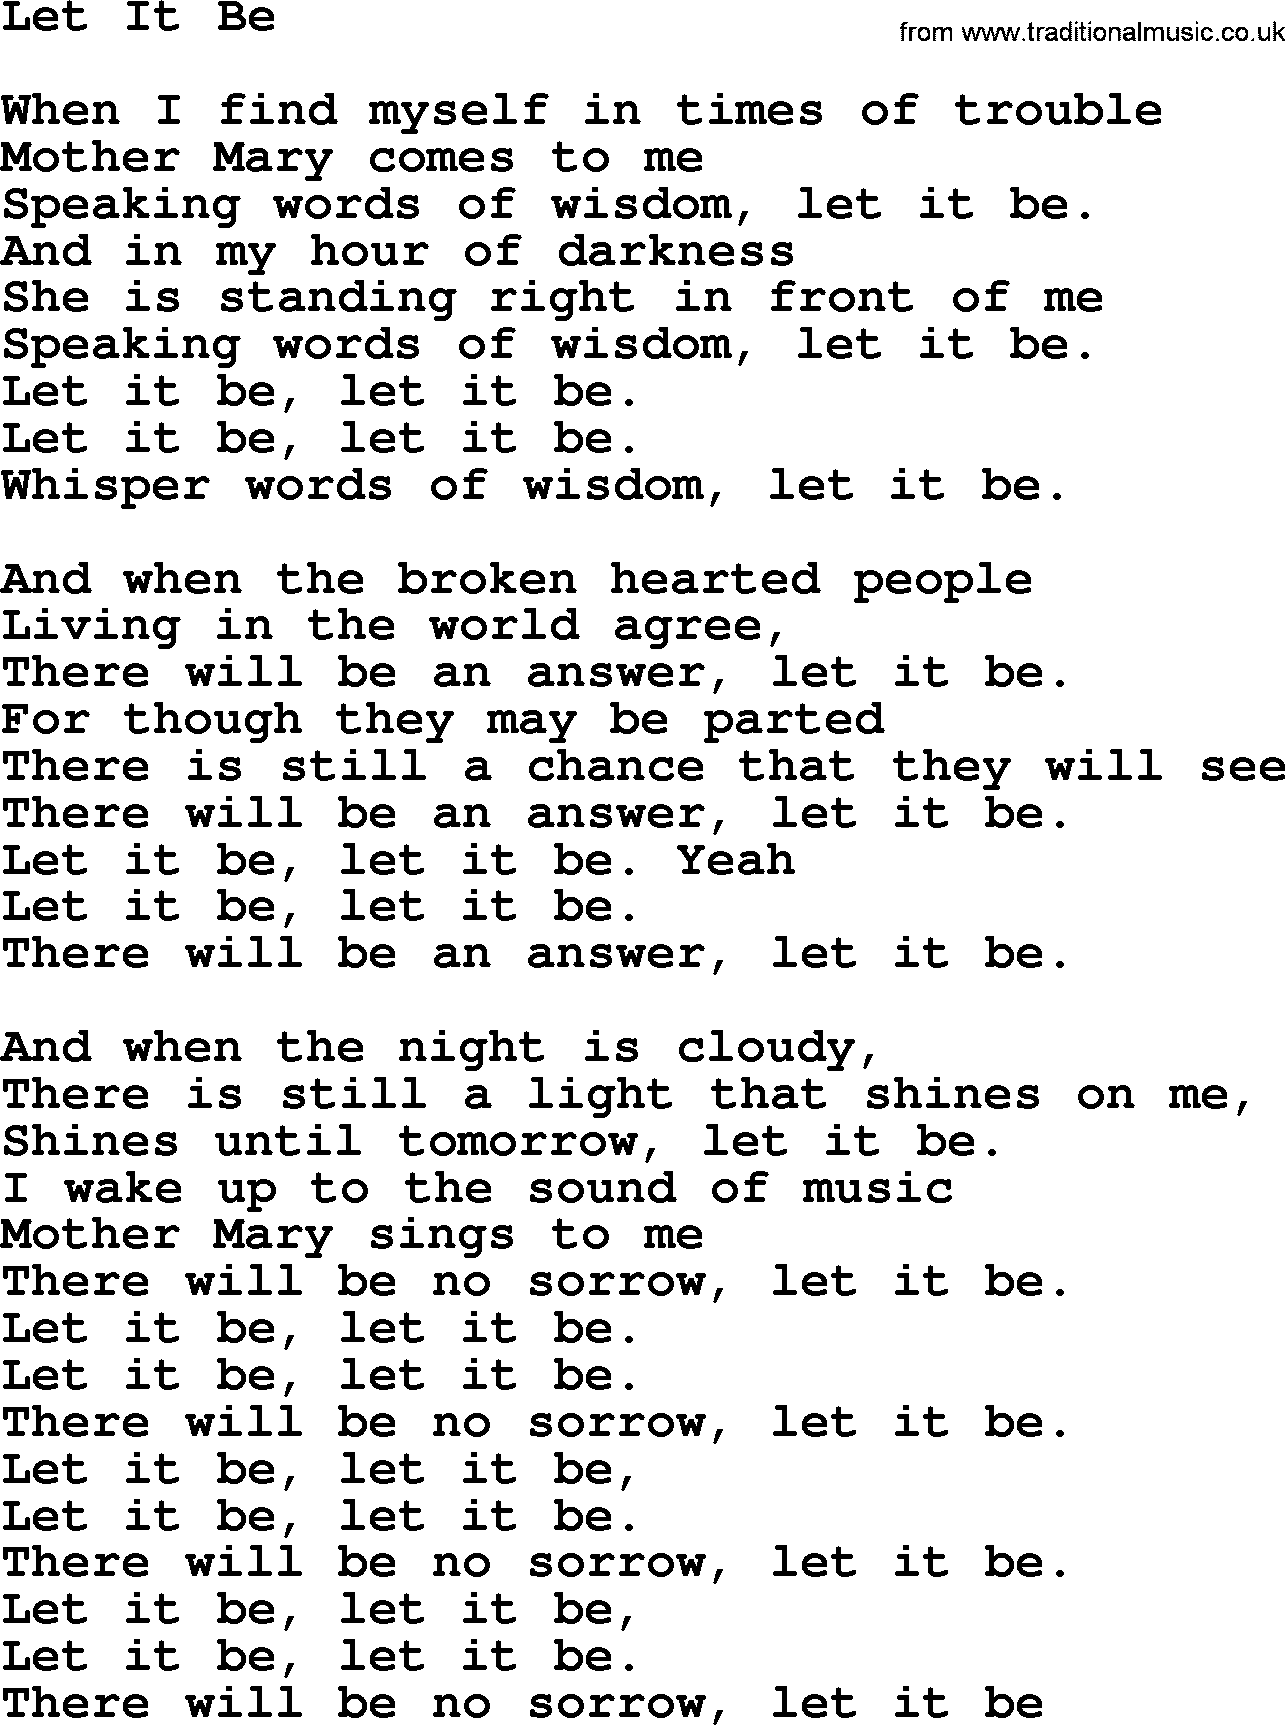 Joan Baez song Let It Be, lyrics